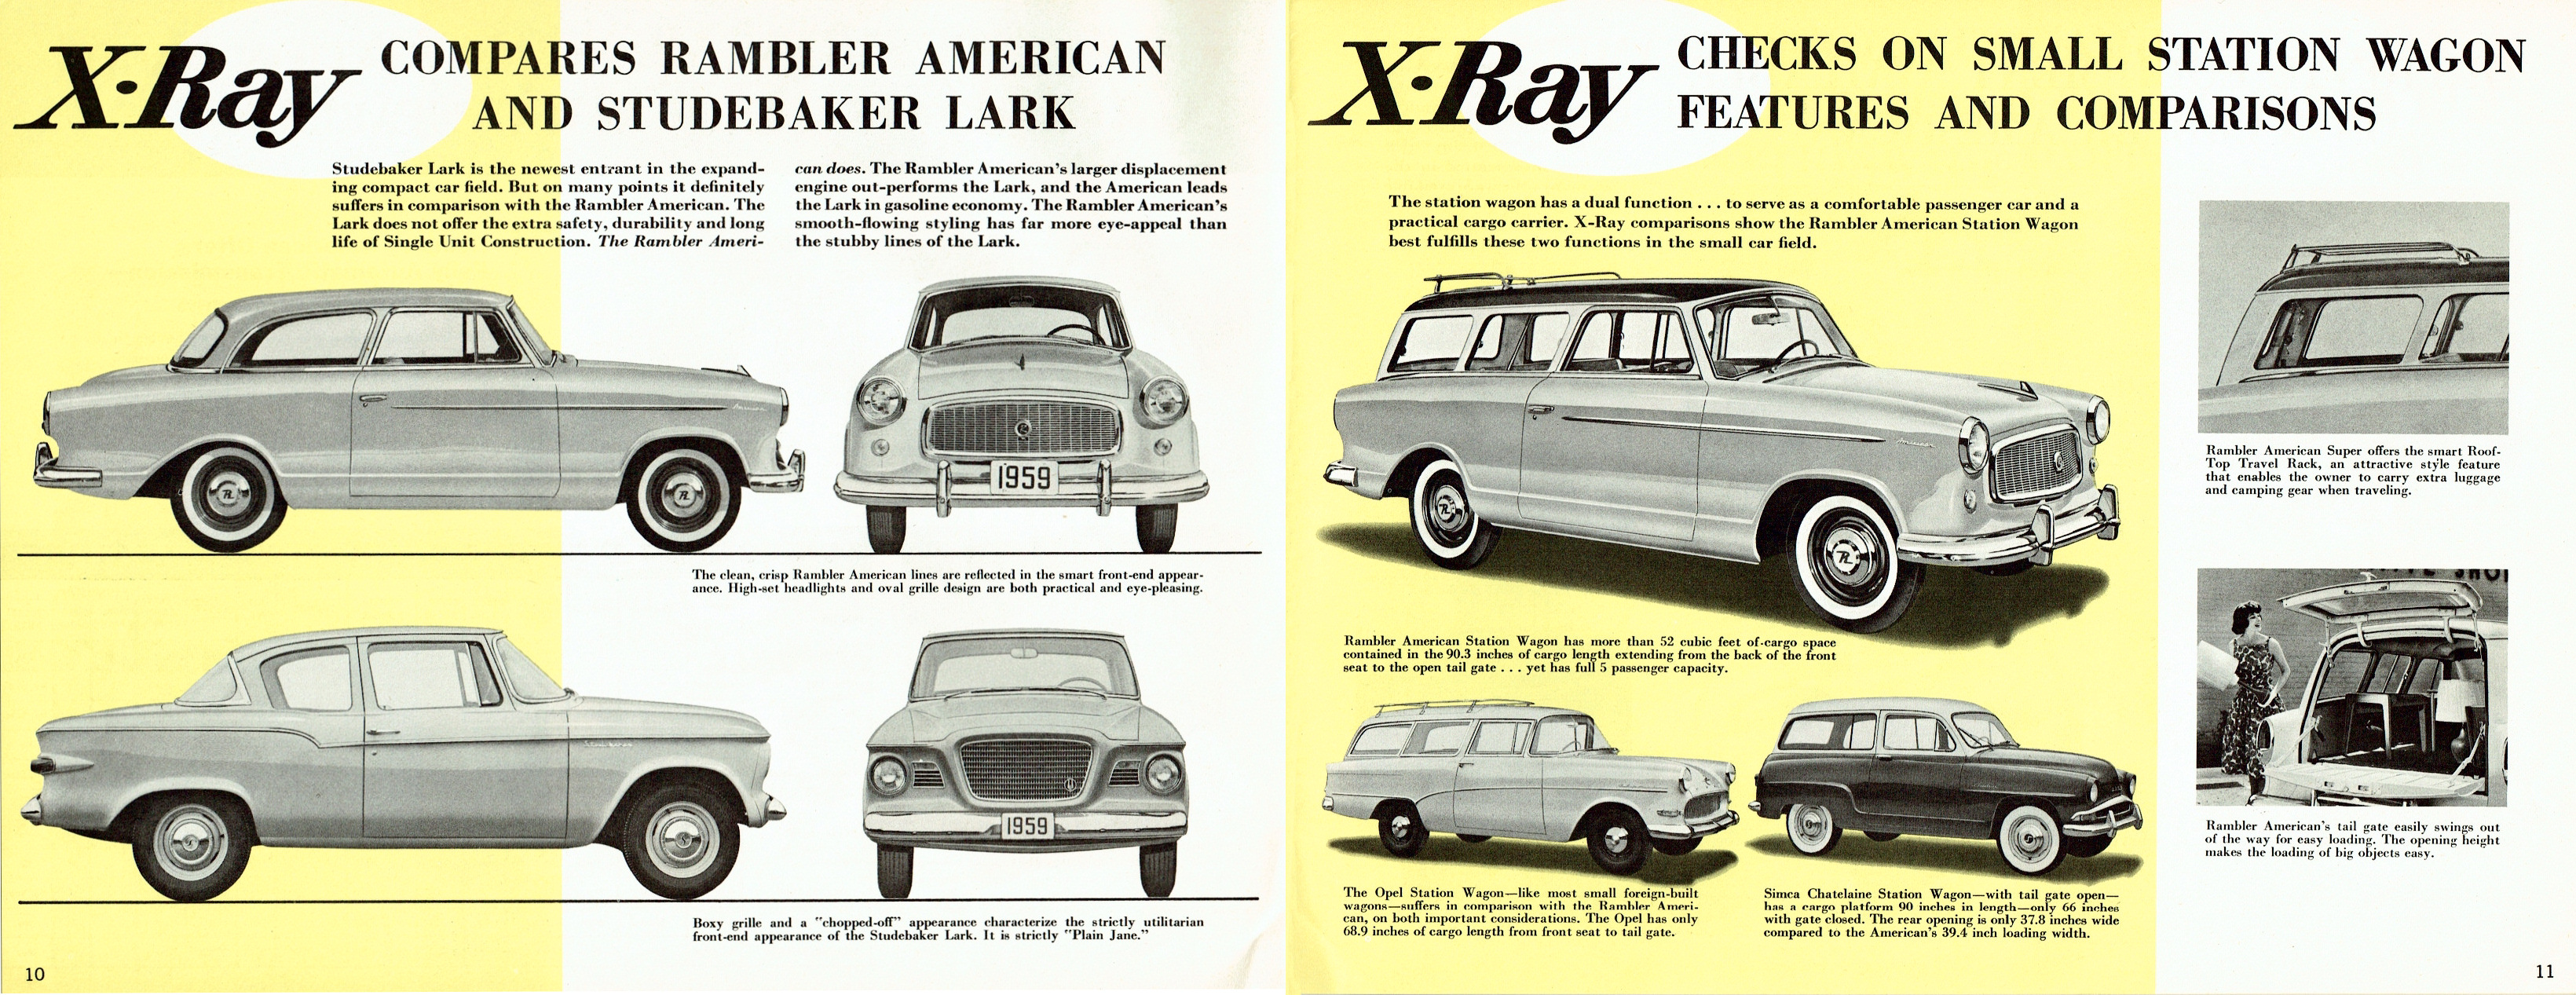 1959__X-Ray_American-10-11